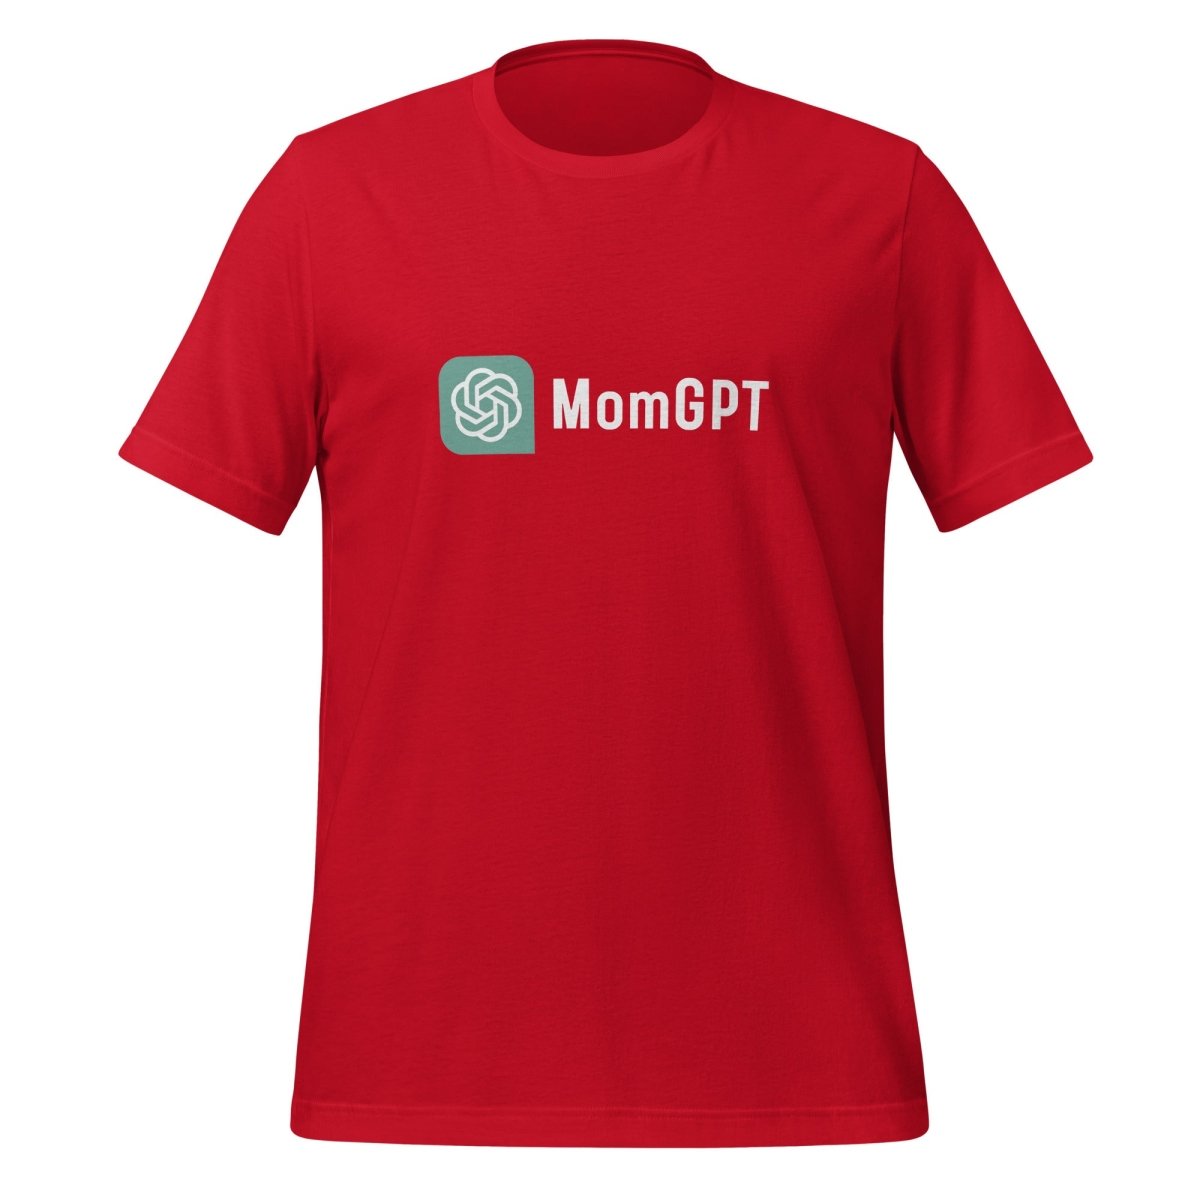 MomGPT T - Shirt (unisex) - Red - AI Store